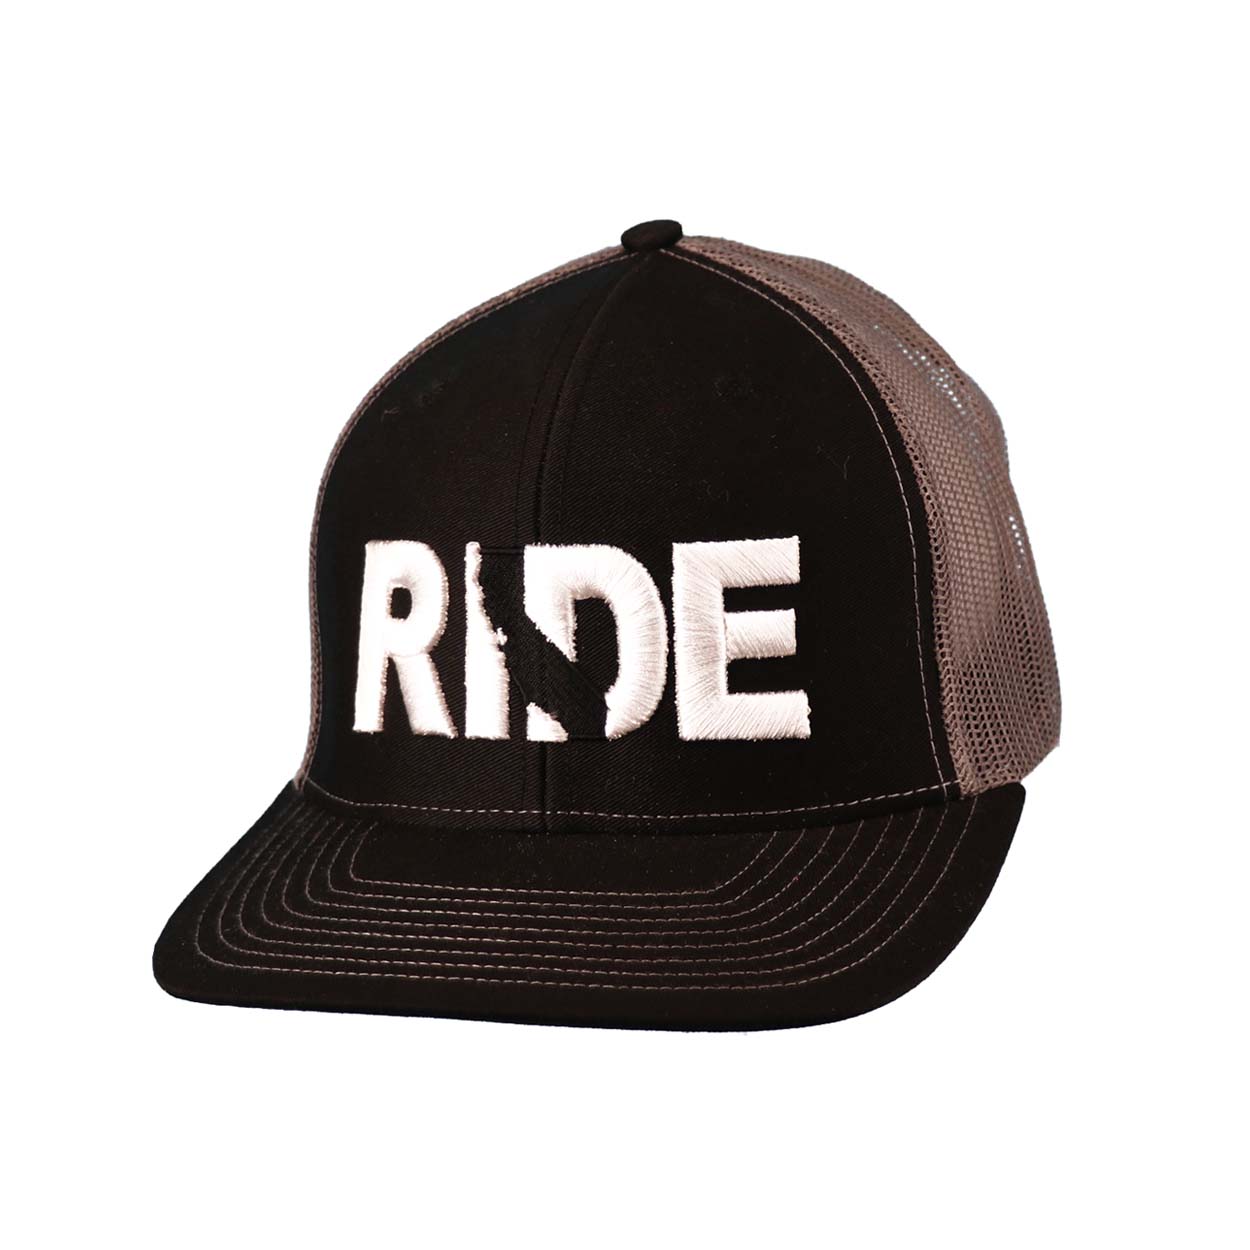 Ride California Classic Embroidered Snapback Trucker Hat Black/Gray